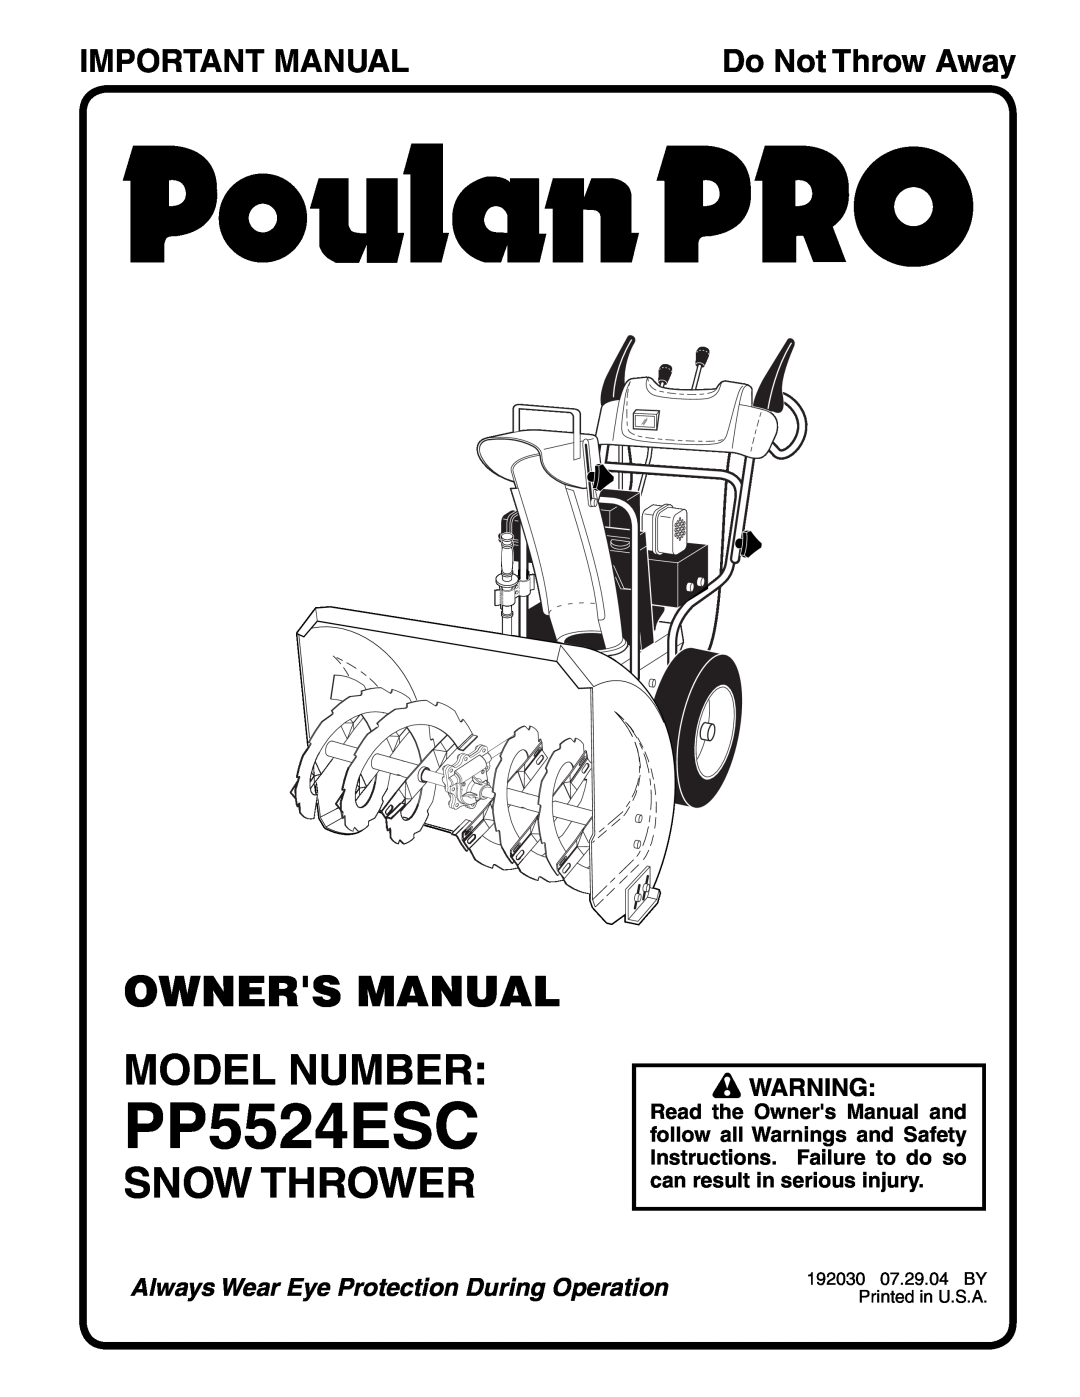 Poulan PP5524ESC owner manual Snow Thrower, Important Manual, Do Not Throw Away 